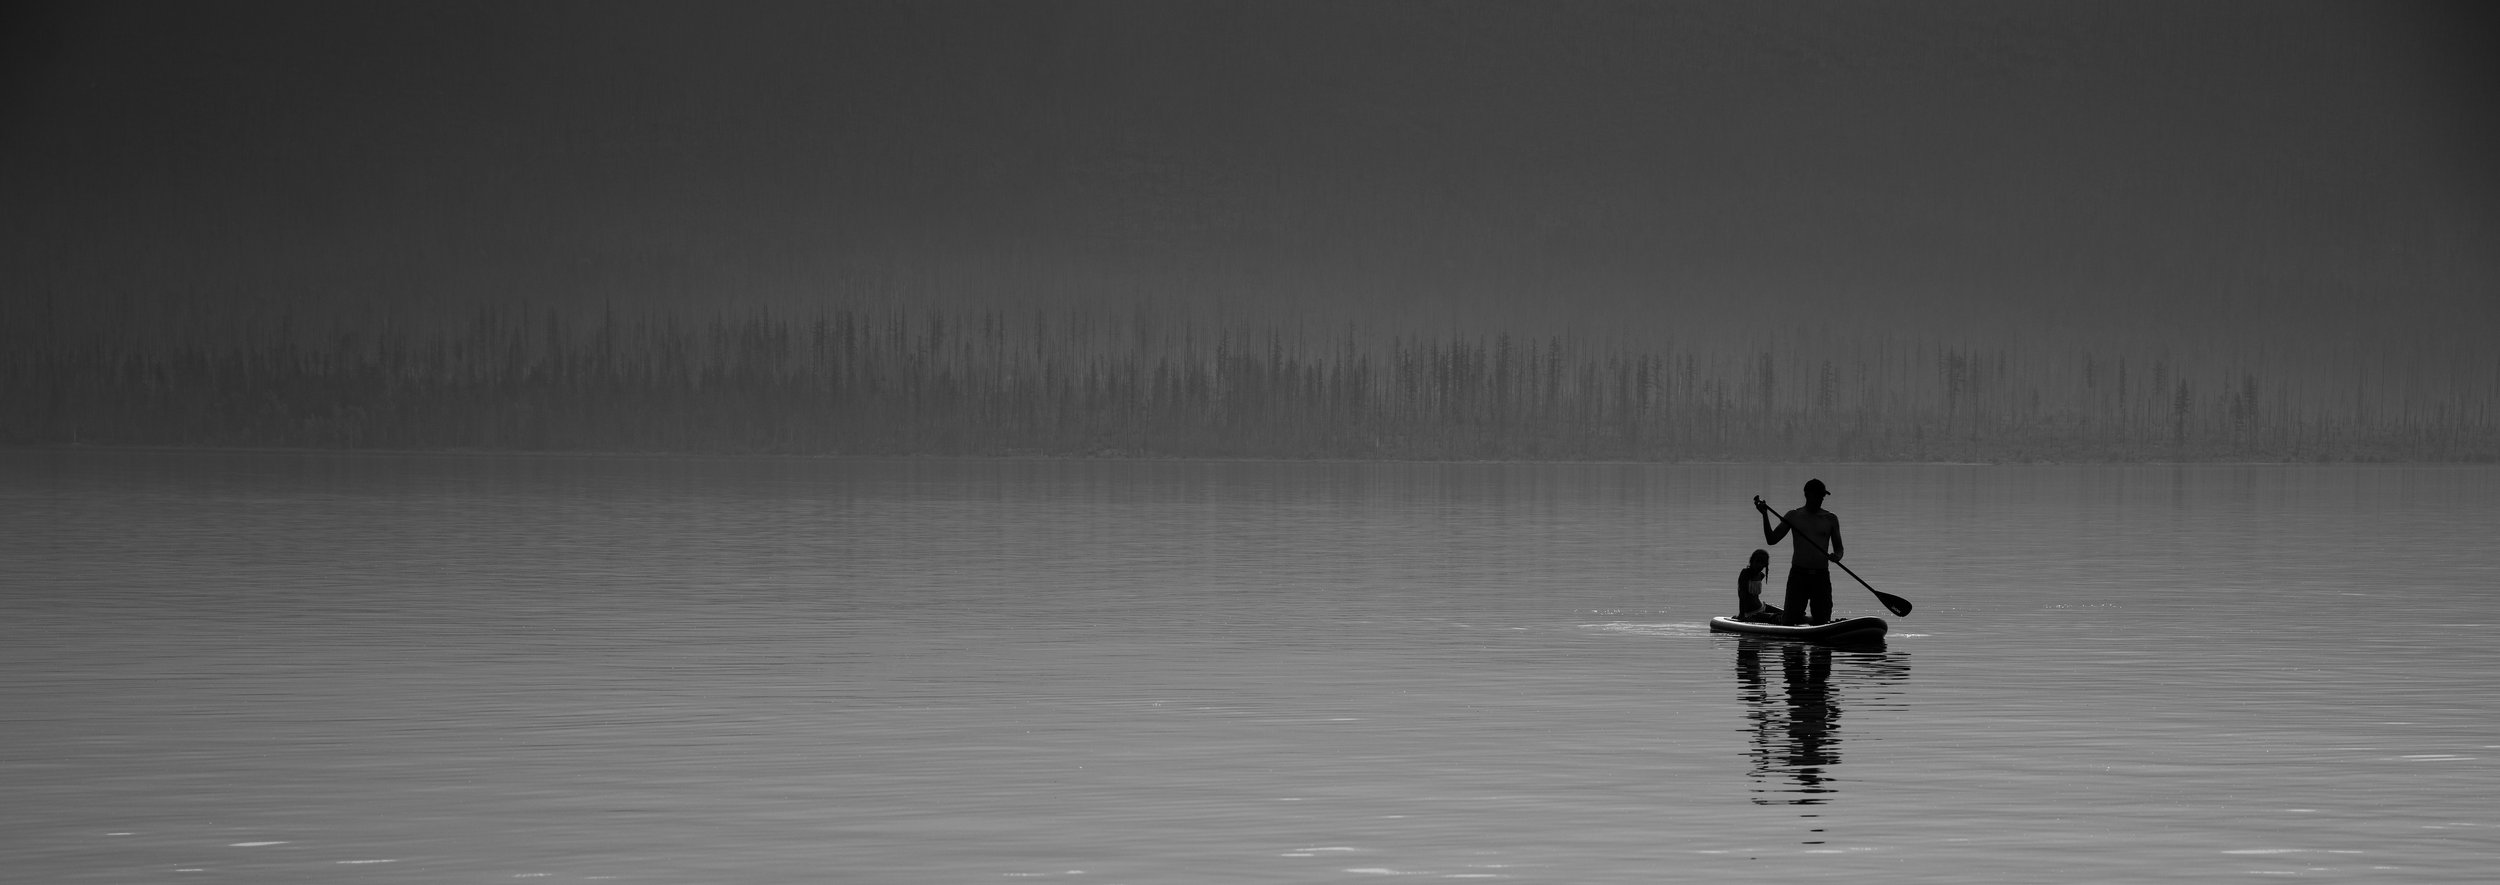 ferrari_vincent_silhouettes-on-the-lake.jpg